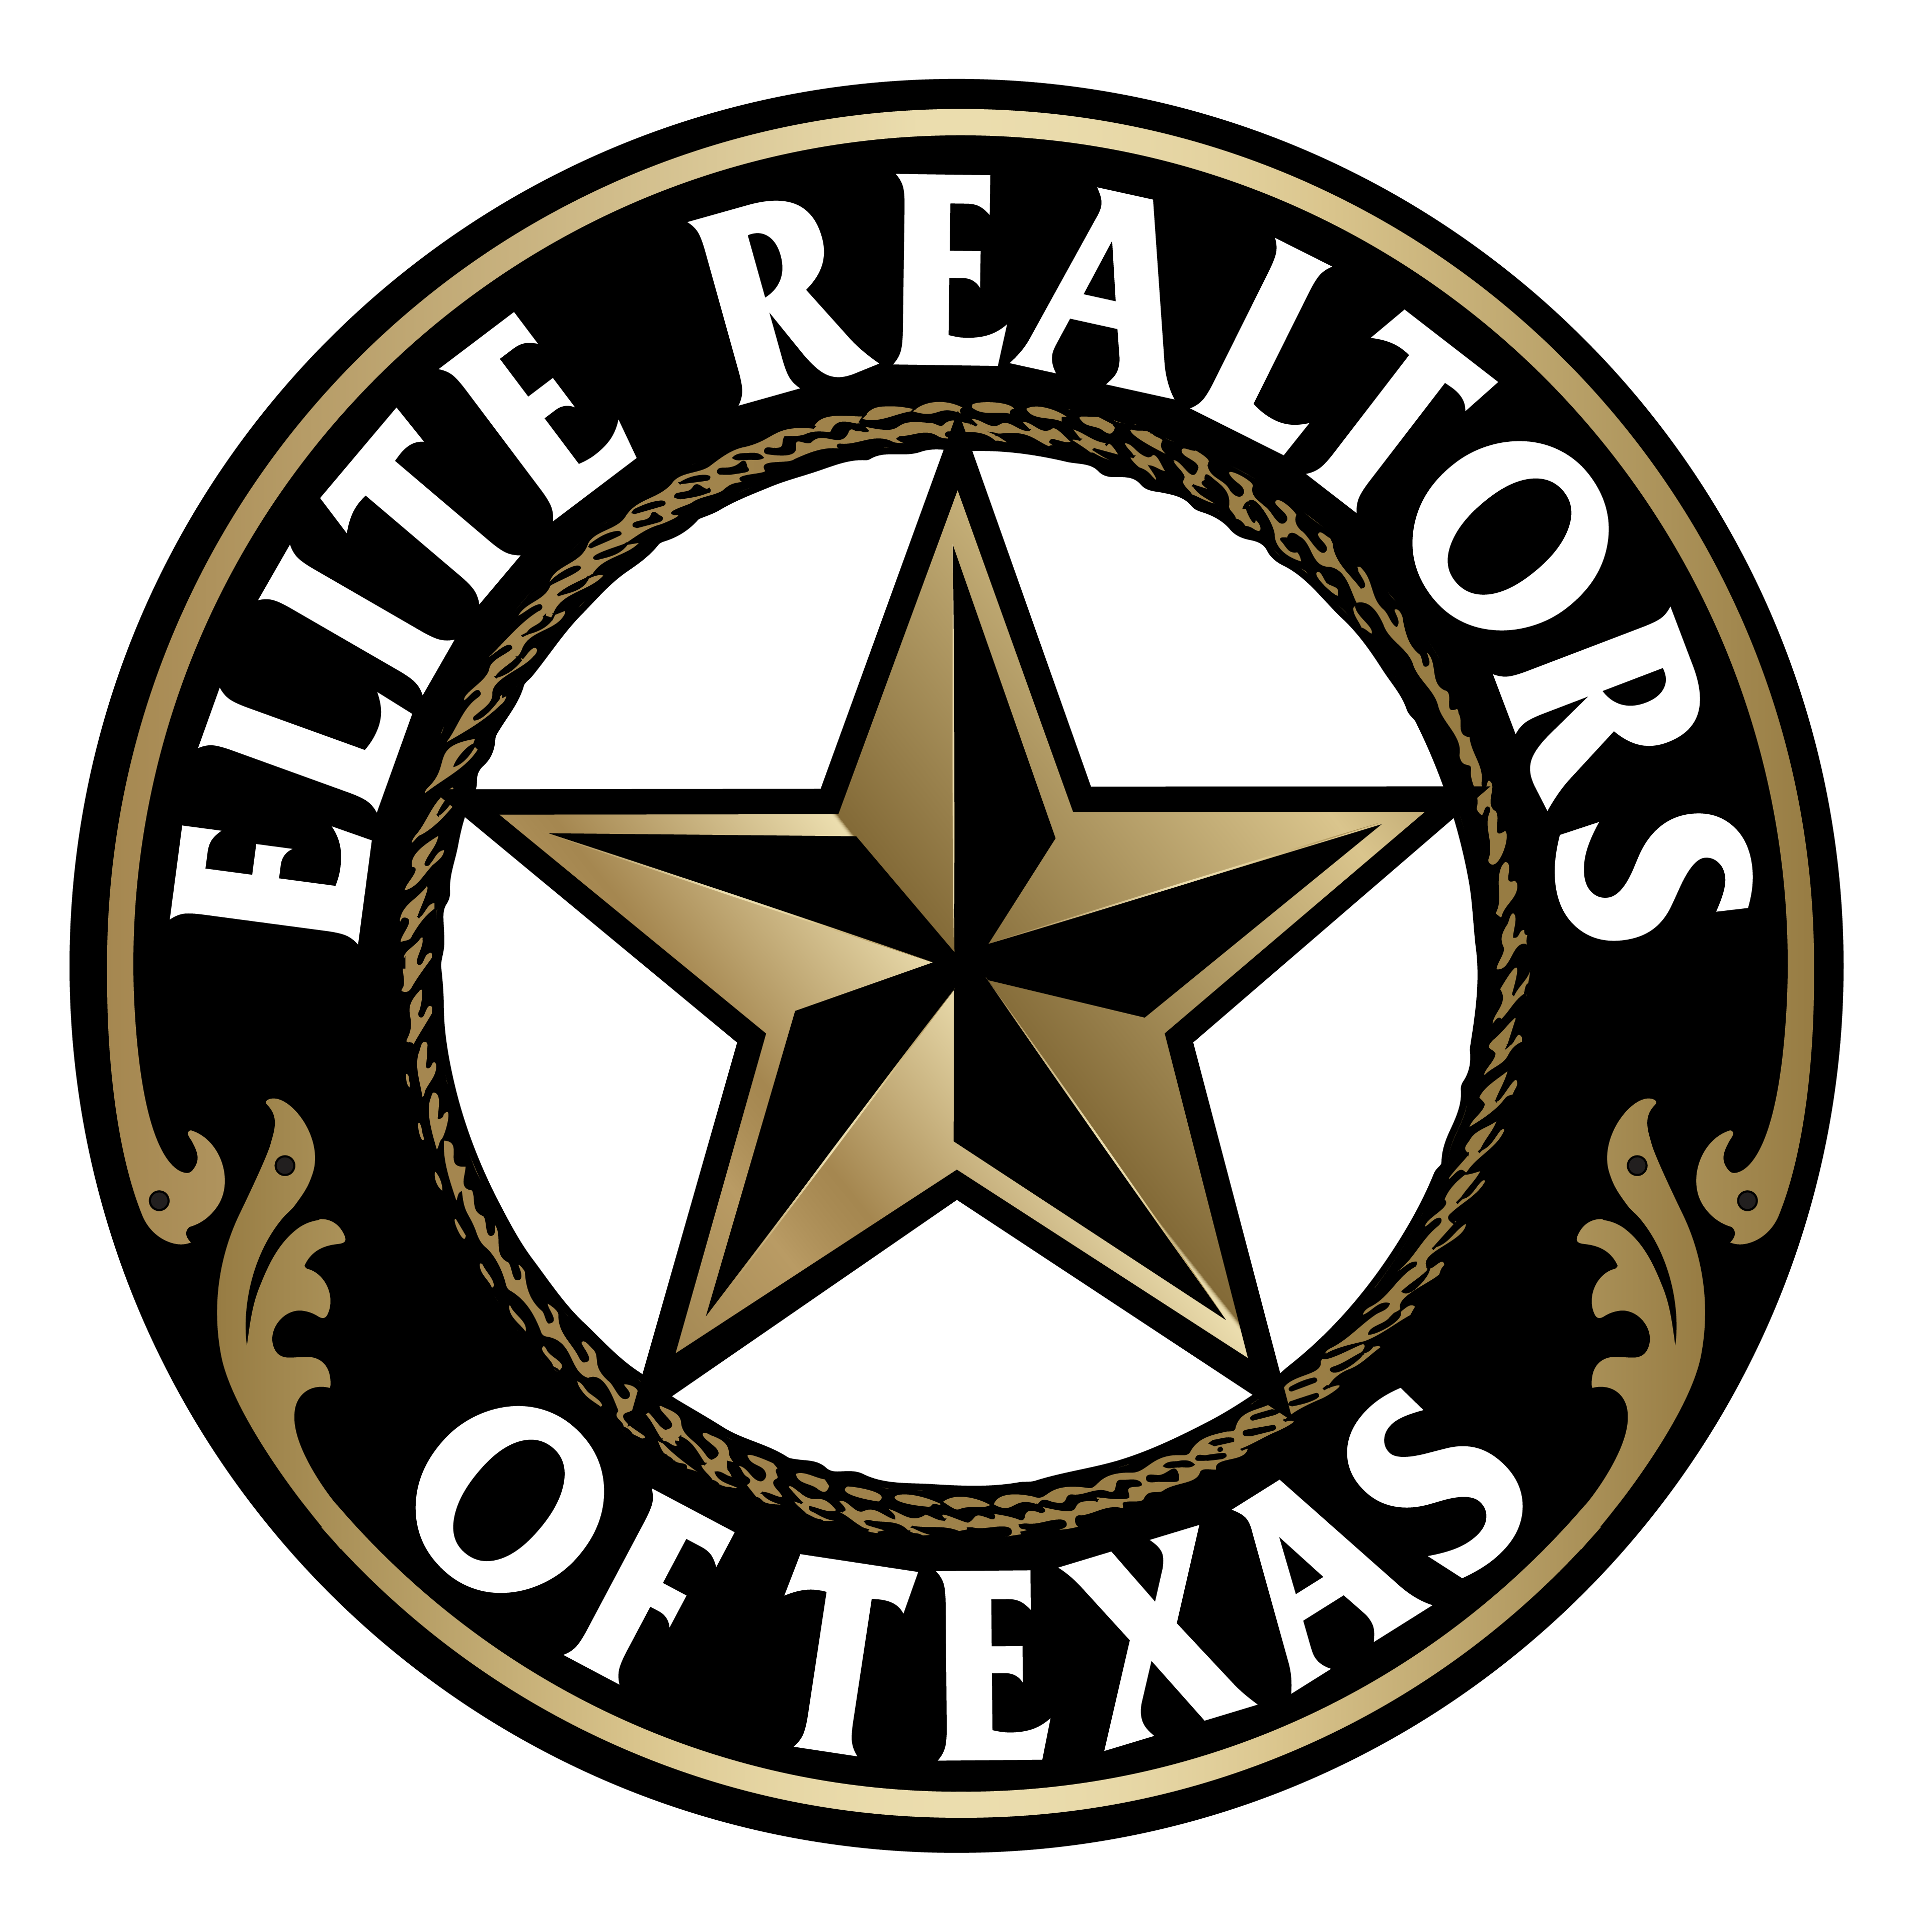 Elite, Realtors Of Texas